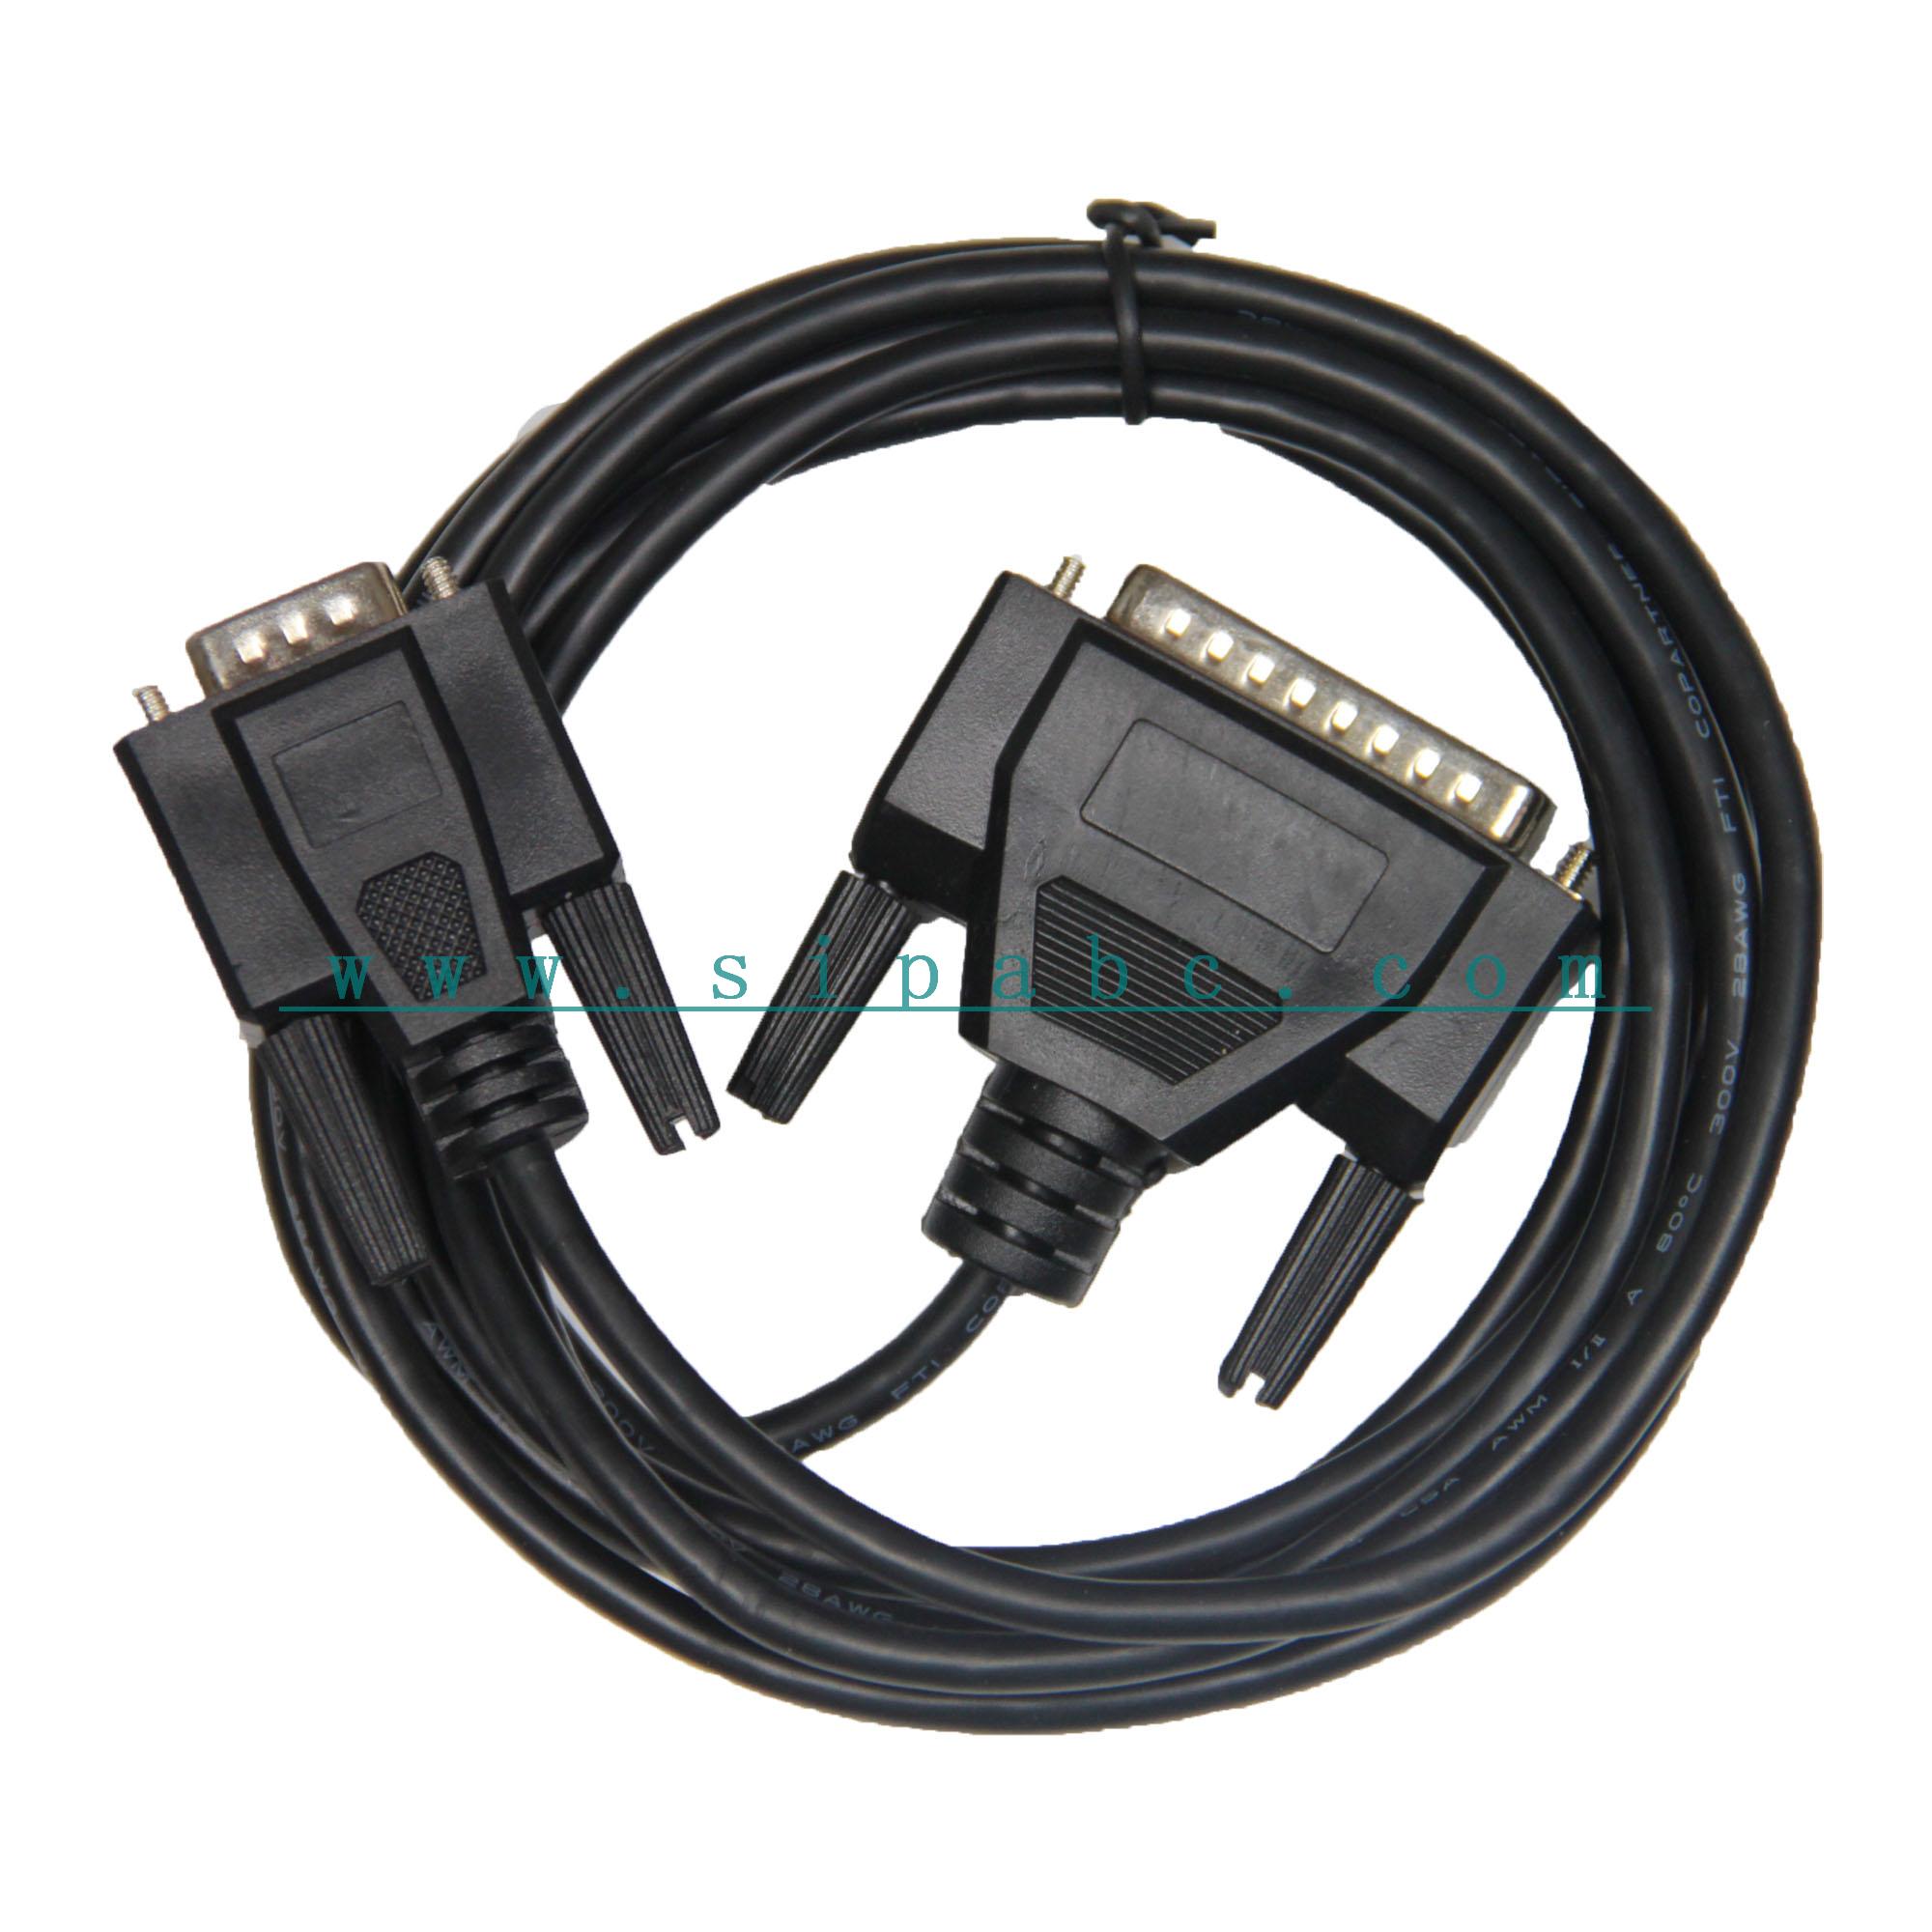 USB-FANUC FTDI Chip USB-DB25M or RS232 Programming Cable 25-Pin for FANUC CNC DNC: DB9F-DB25M 3M